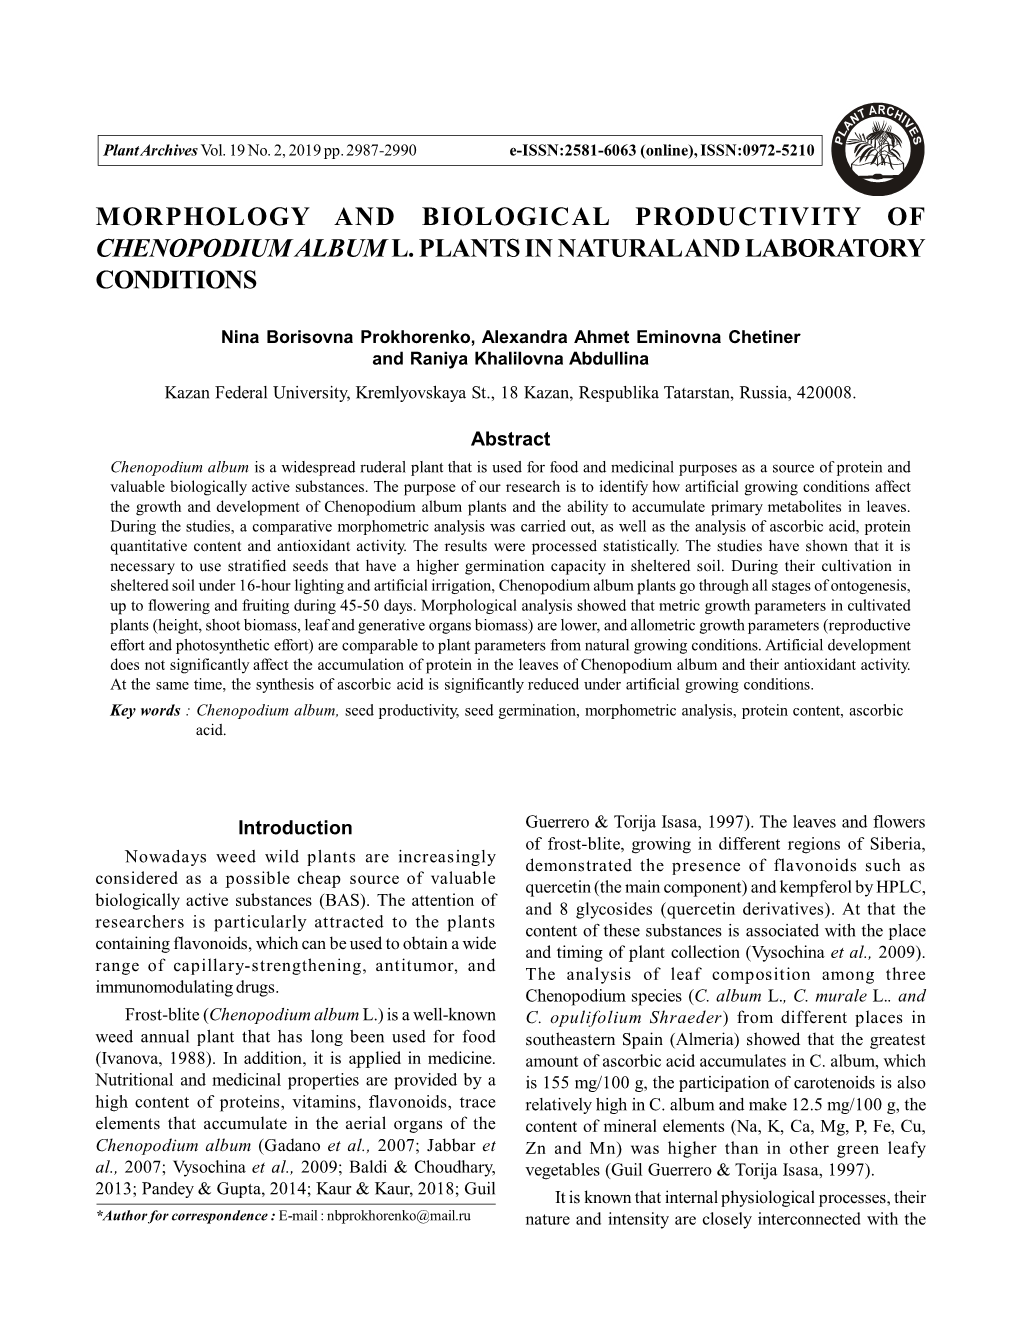 Morphology and Biological Productivity of Chenopodium Album L